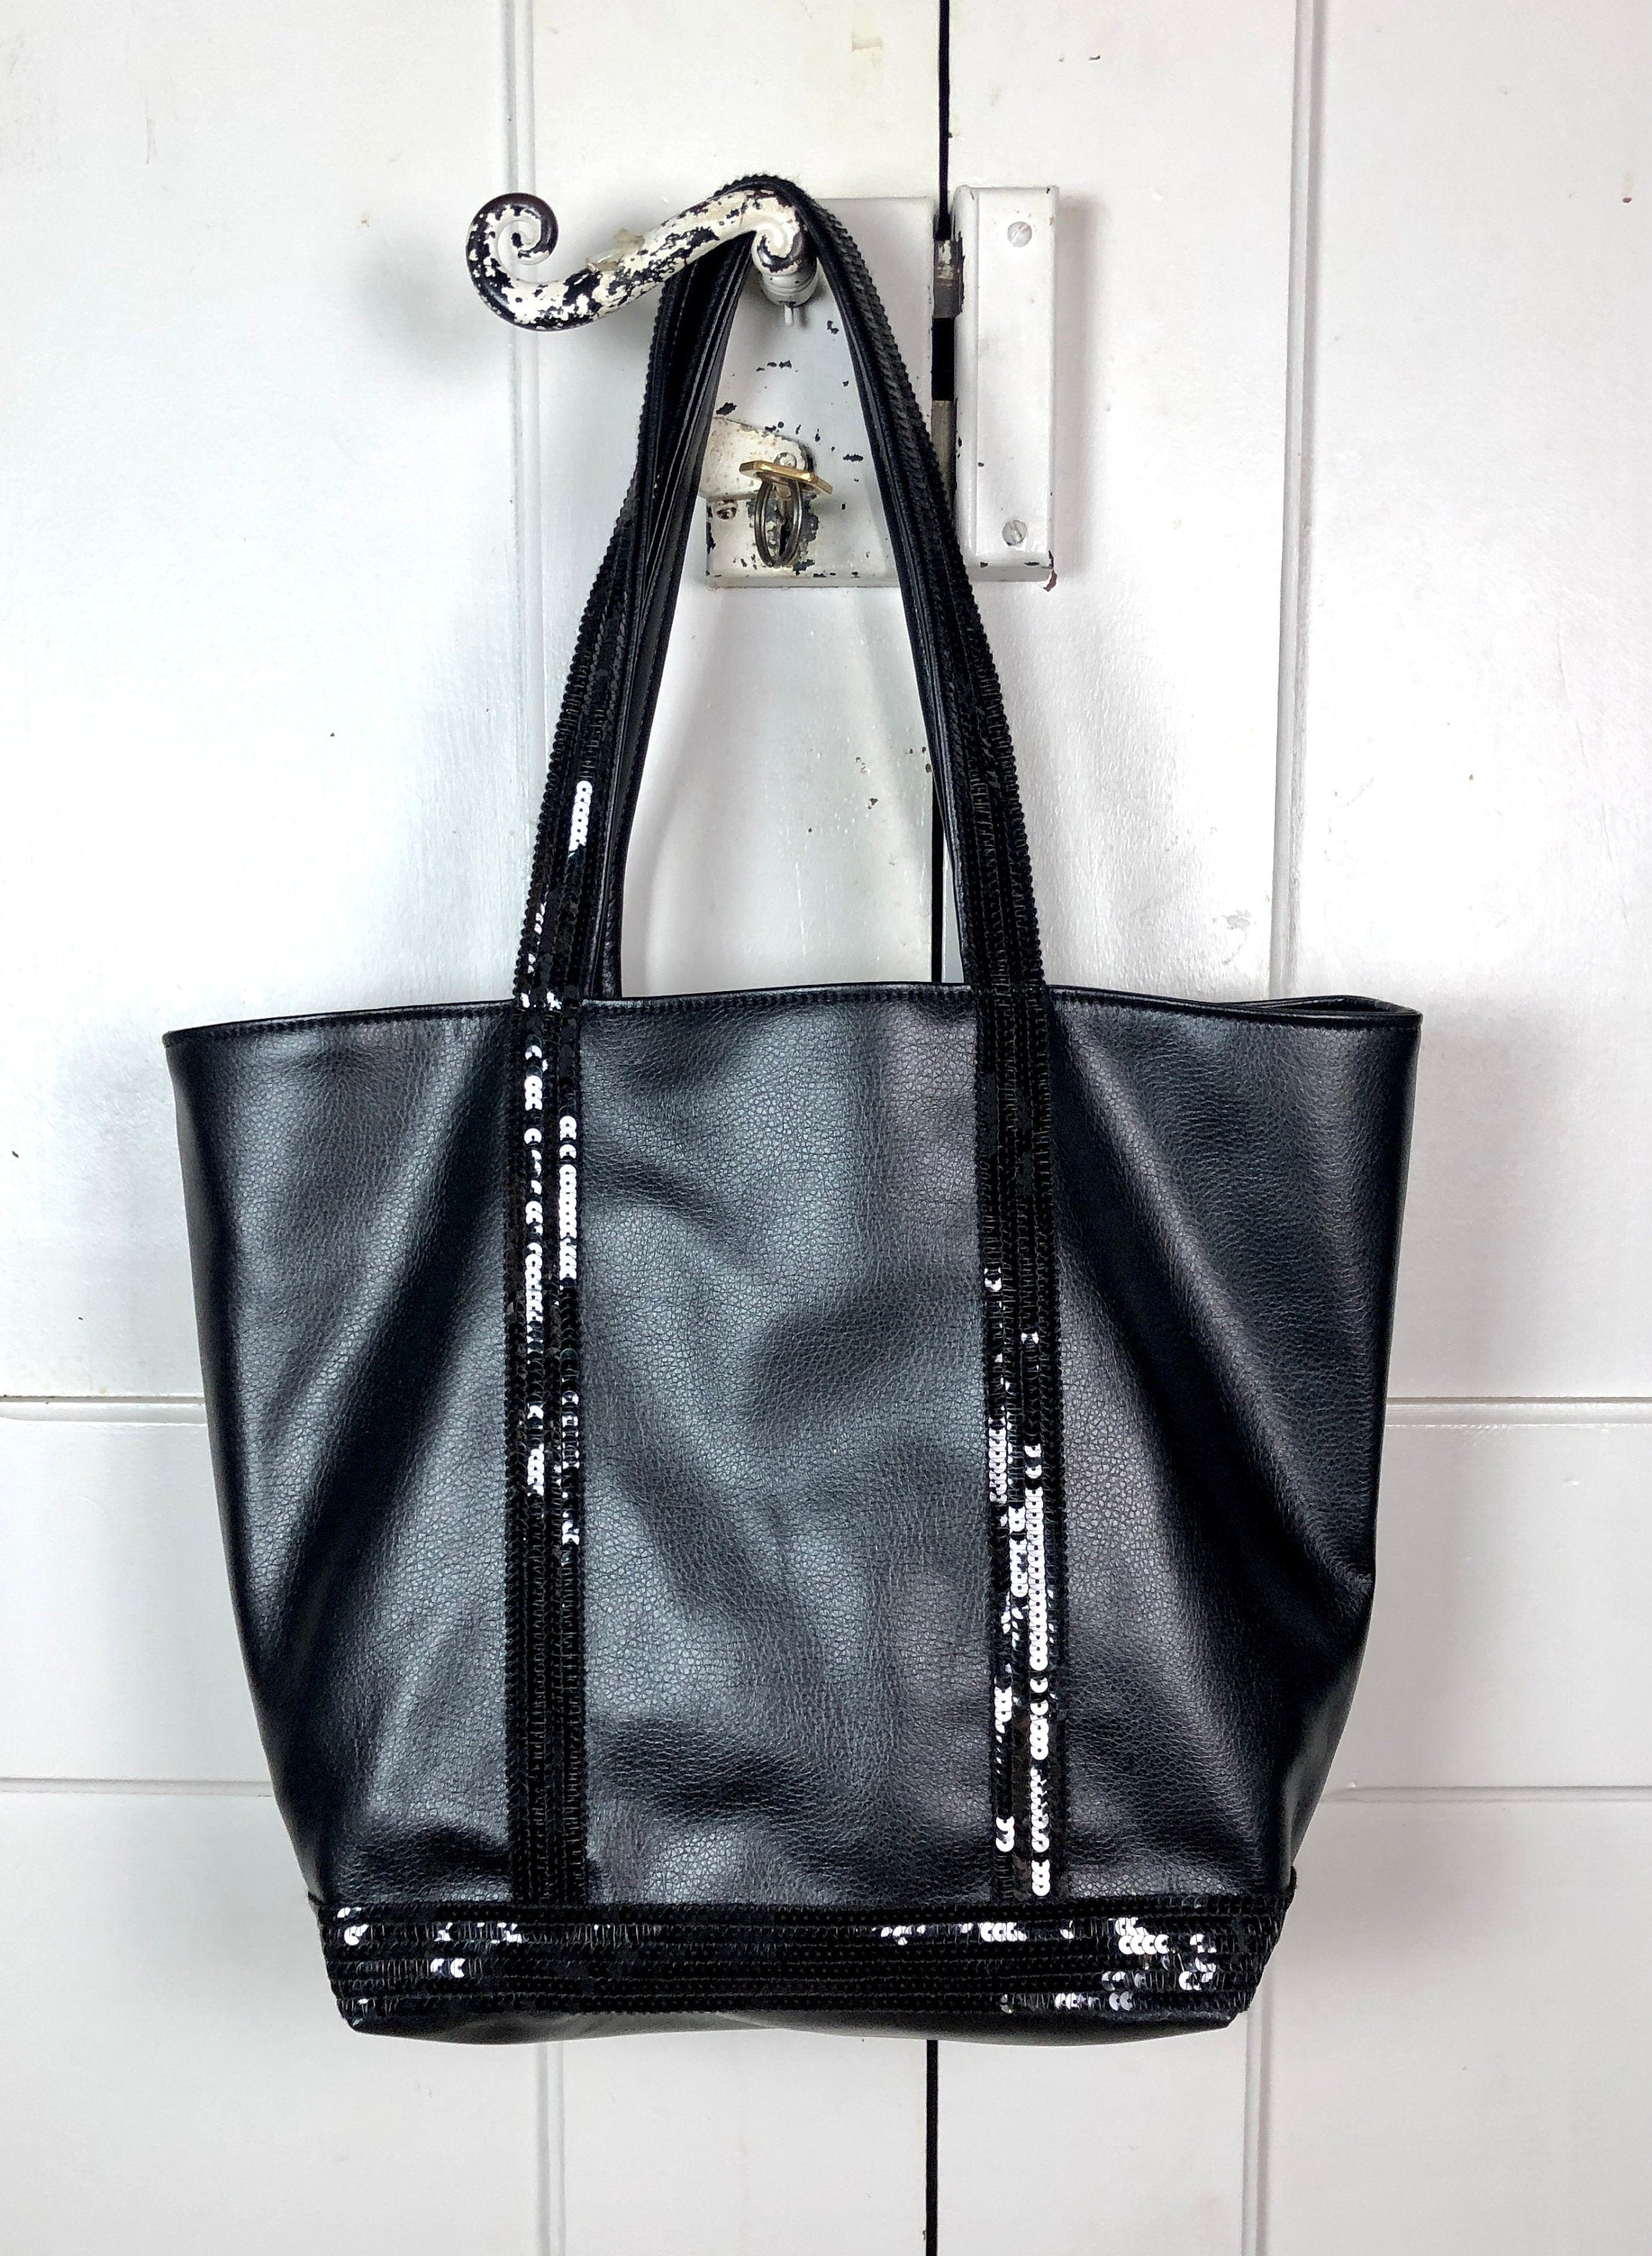 New with tags, Black Leather Cue Everyday HandBag. Original Rrp $199 -  Harrington & Co.